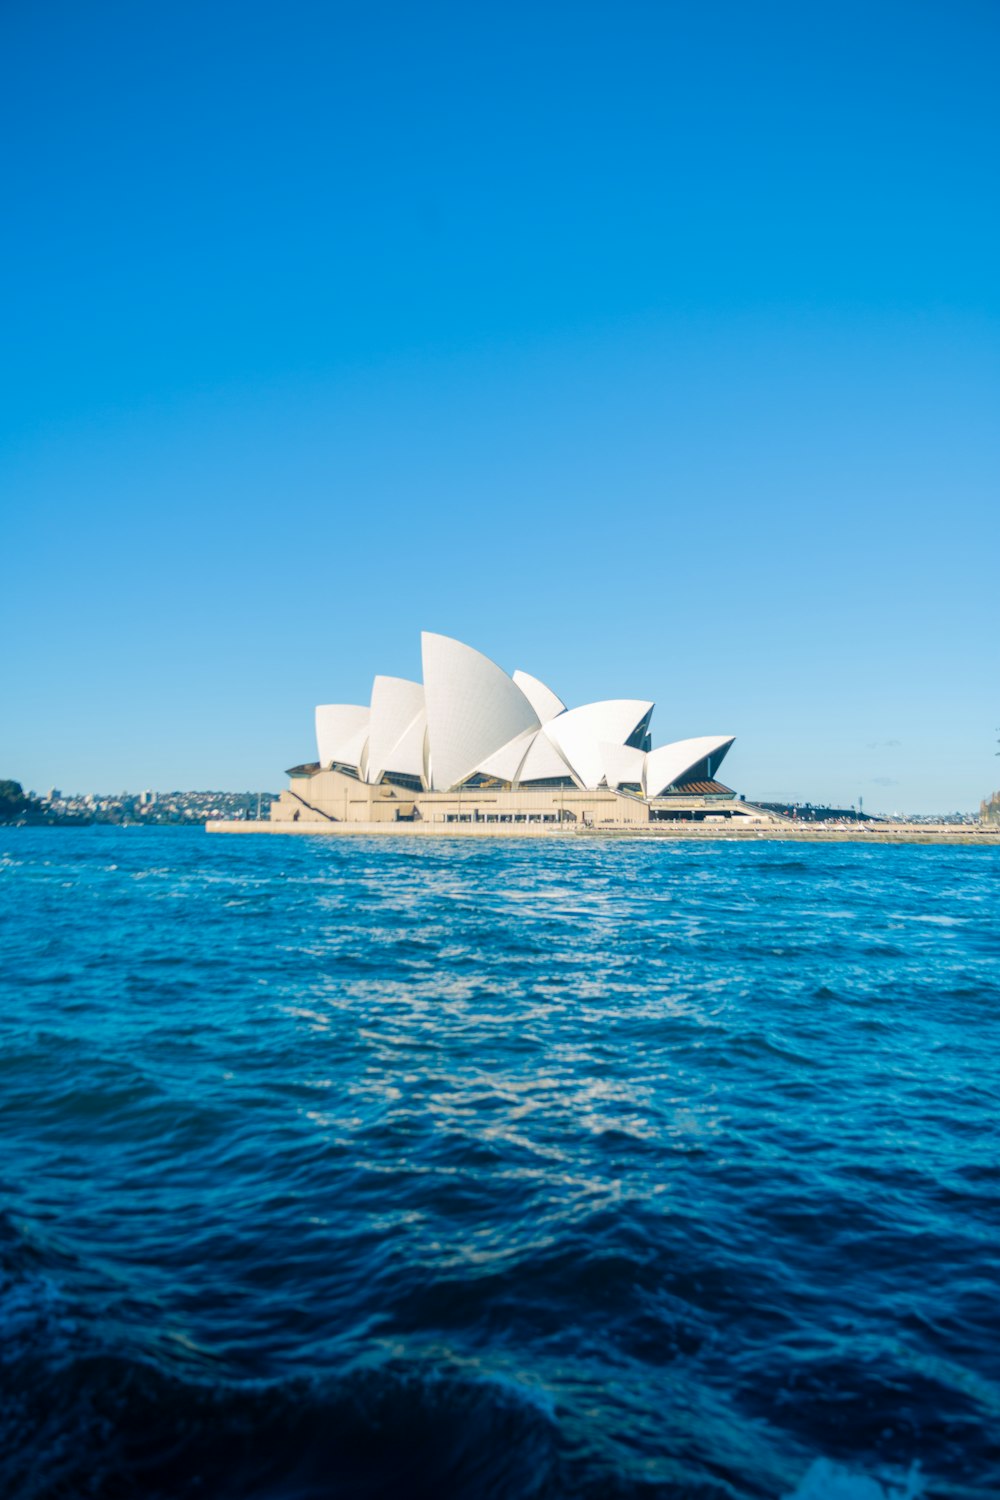 sydney opera house in australia during daytime